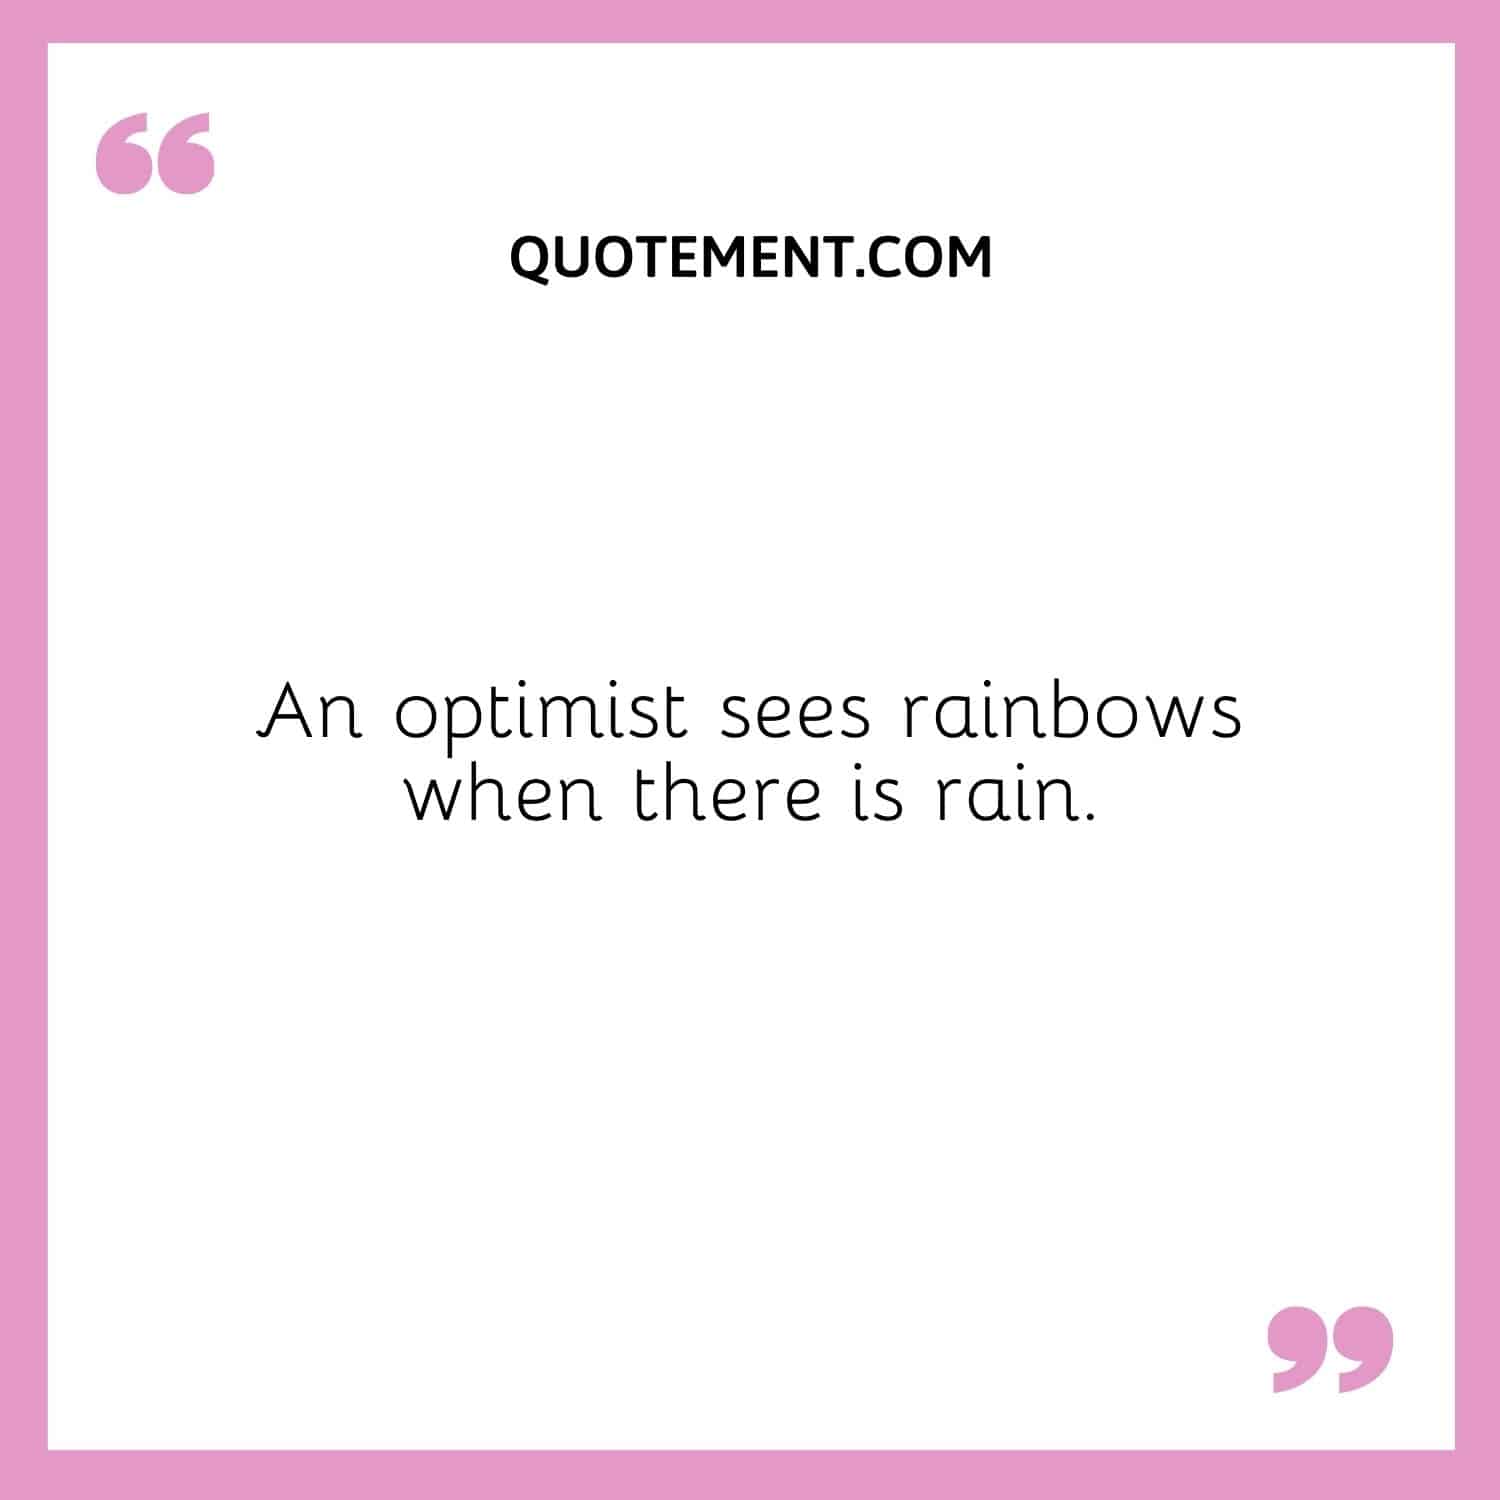 An optimist sees rainbows when there is rain